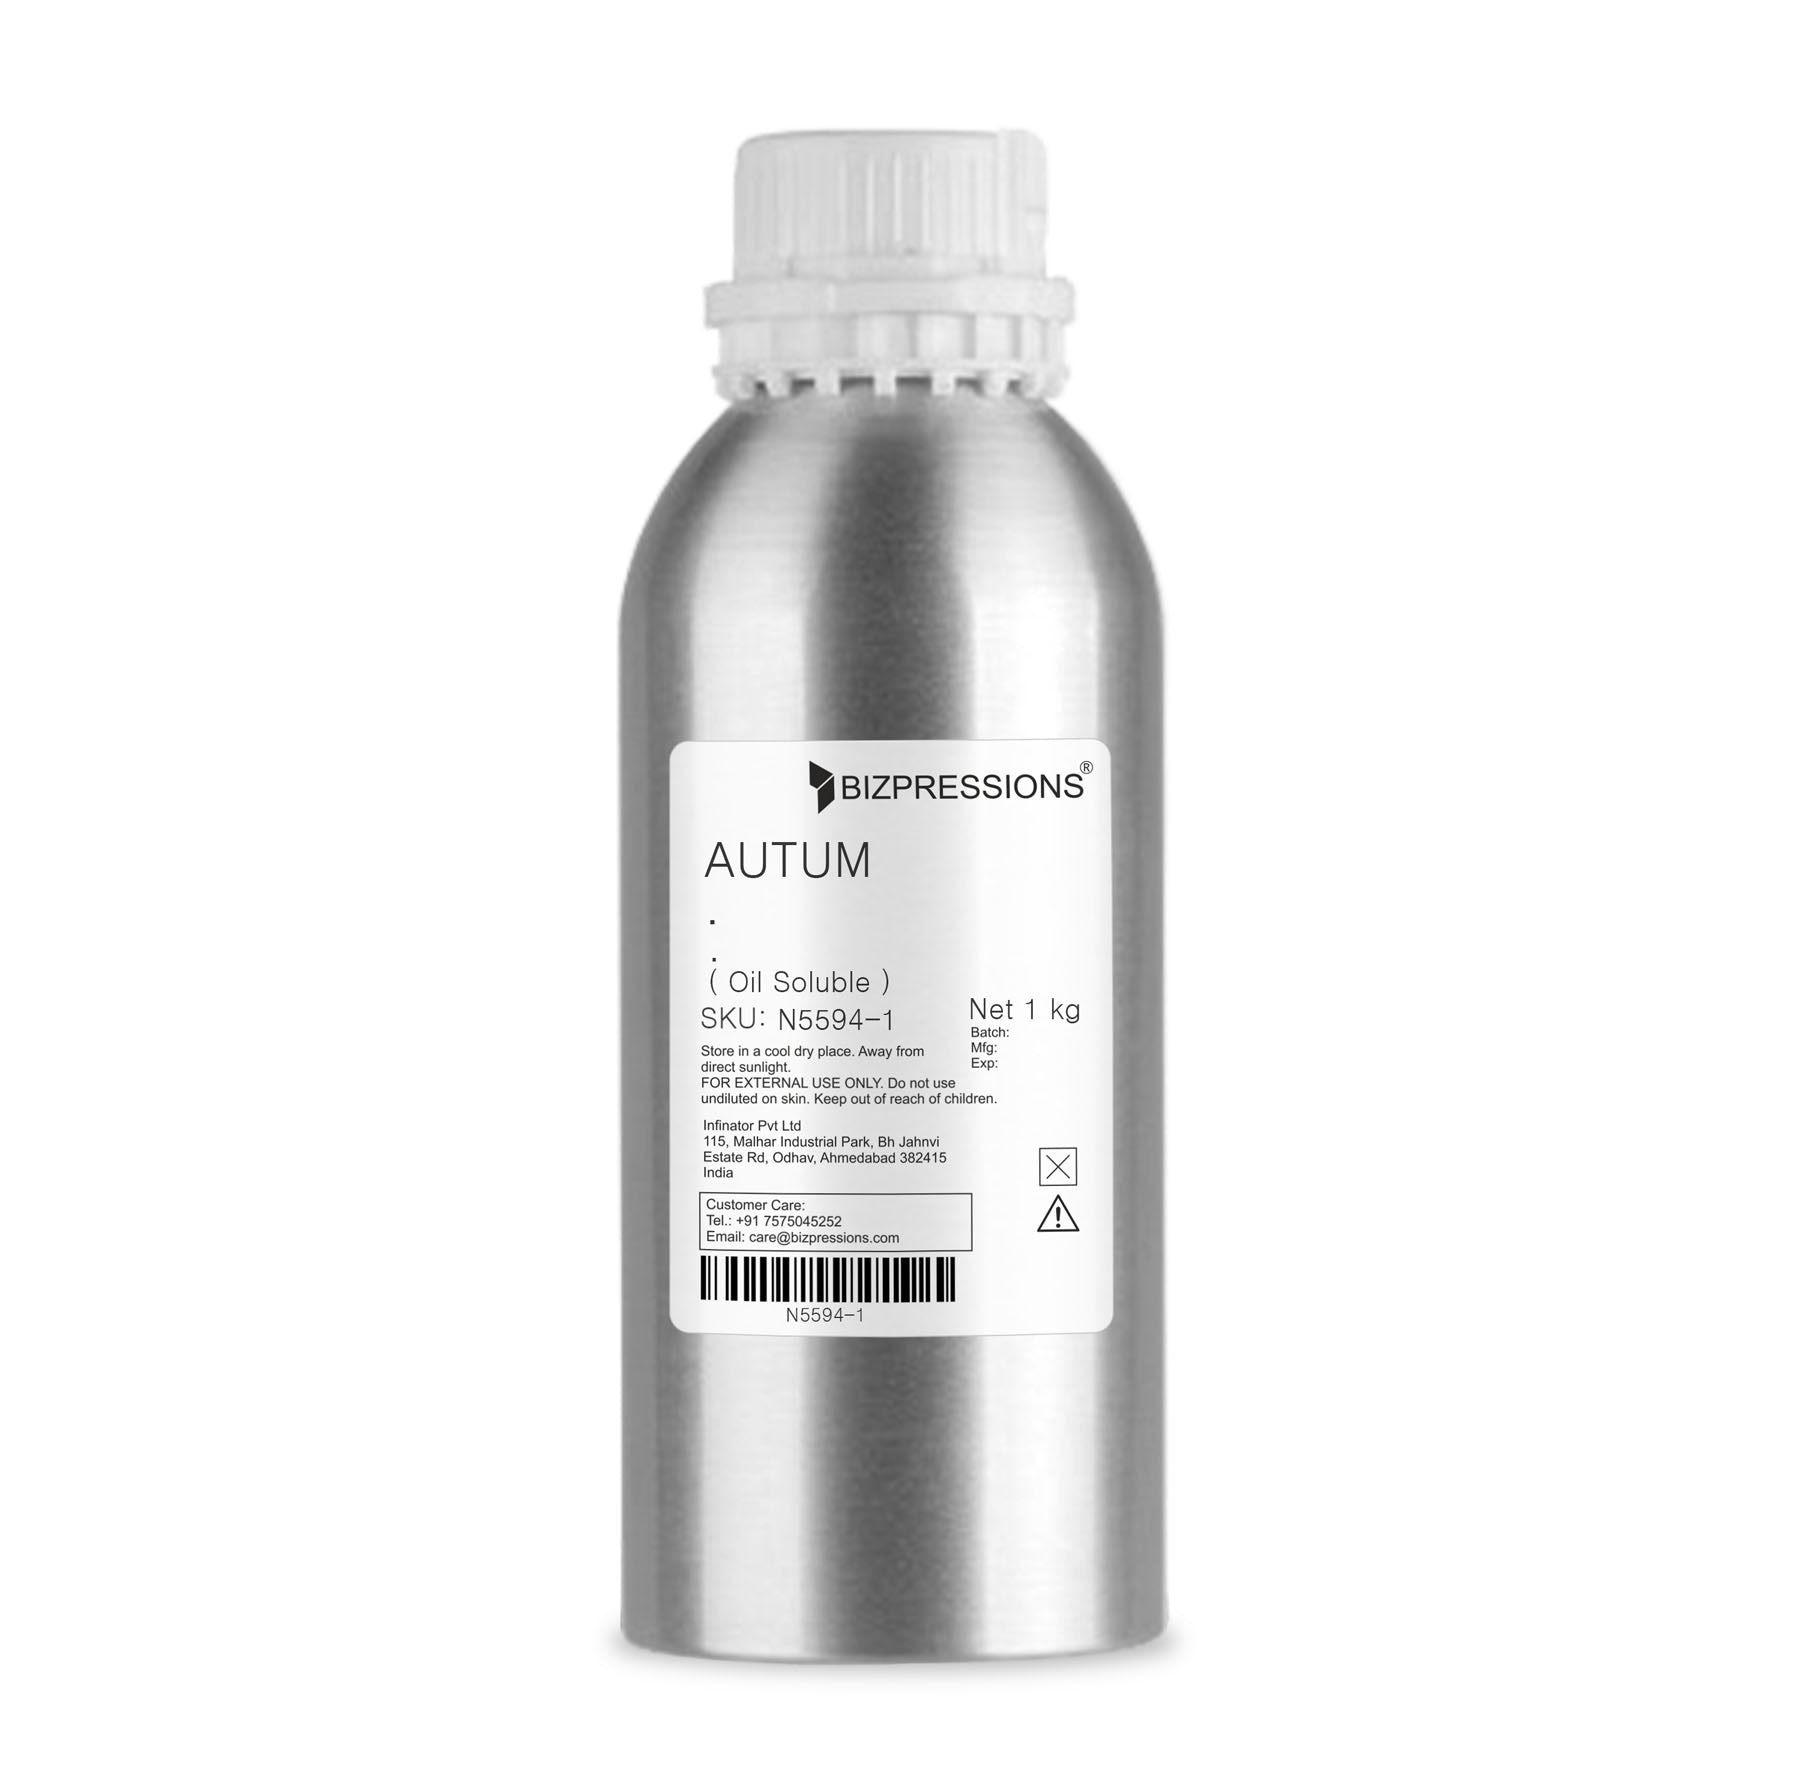 AUTUM - Fragrance ( Oil Soluble ) - 1 kg